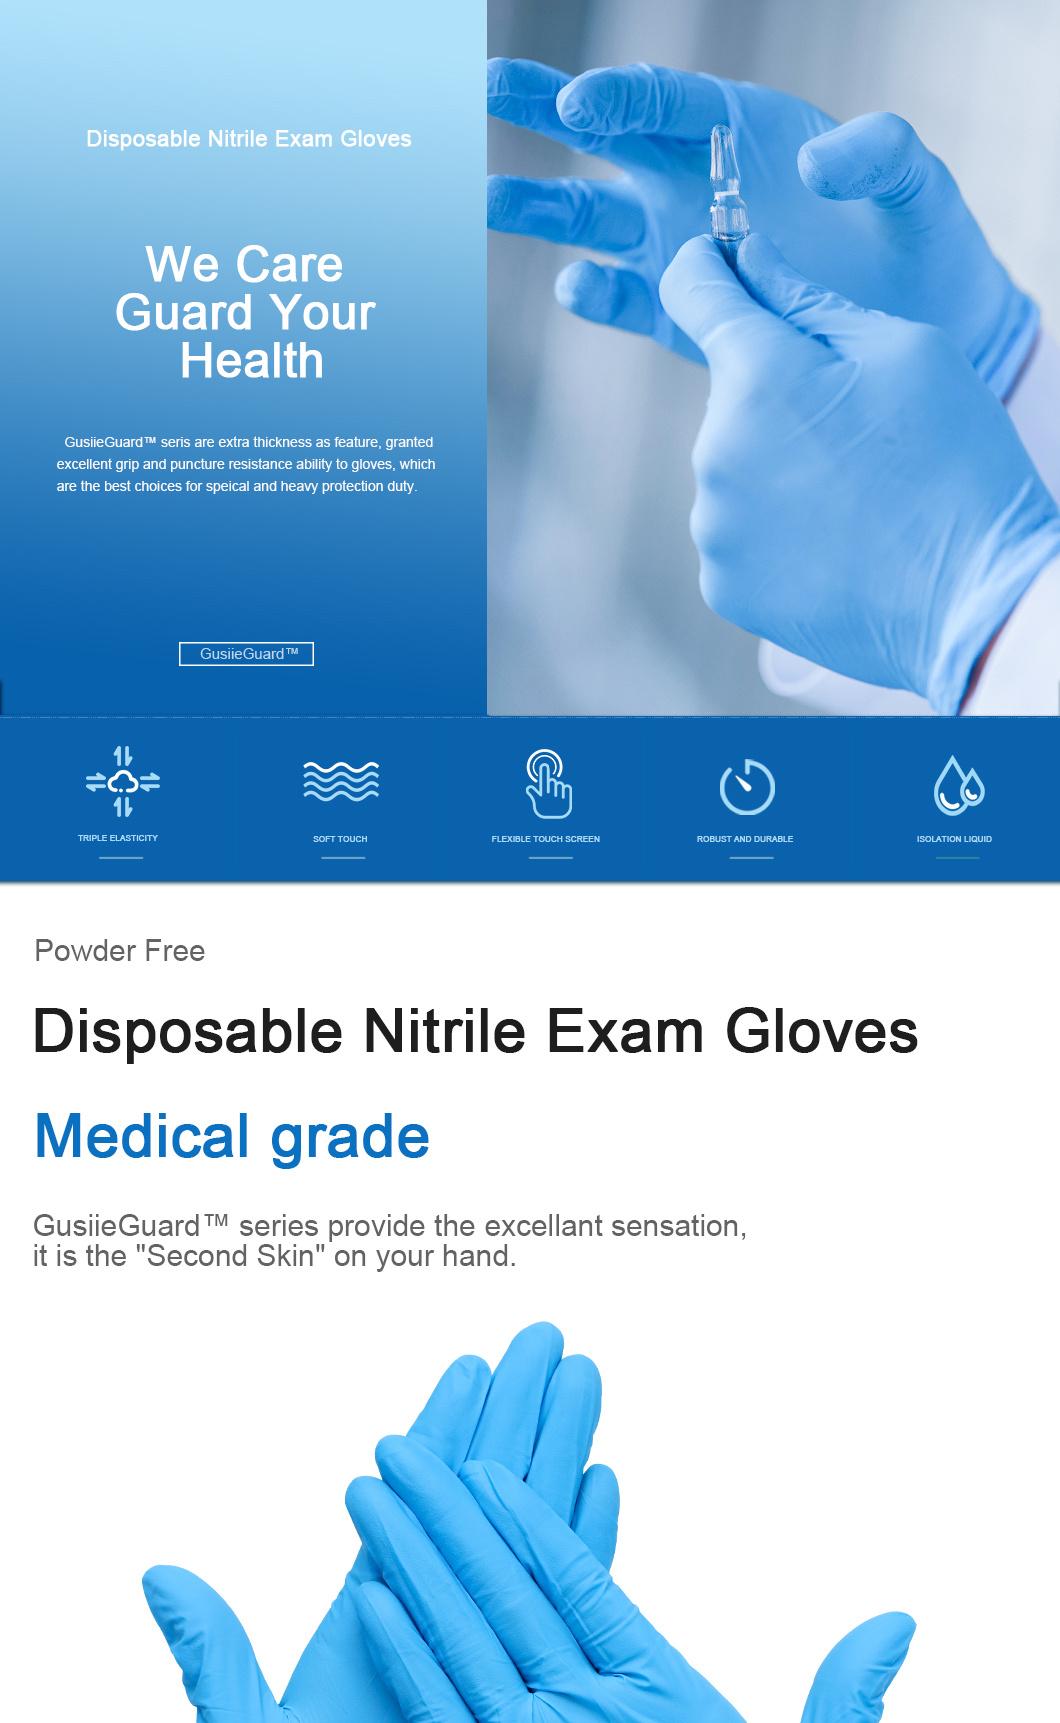 Gusiie Powder Free Disposable Examination Nitrile Glove Disposable Powdered Nitrile Powder Free Medical Examination Latex Nitrile Large Gloves